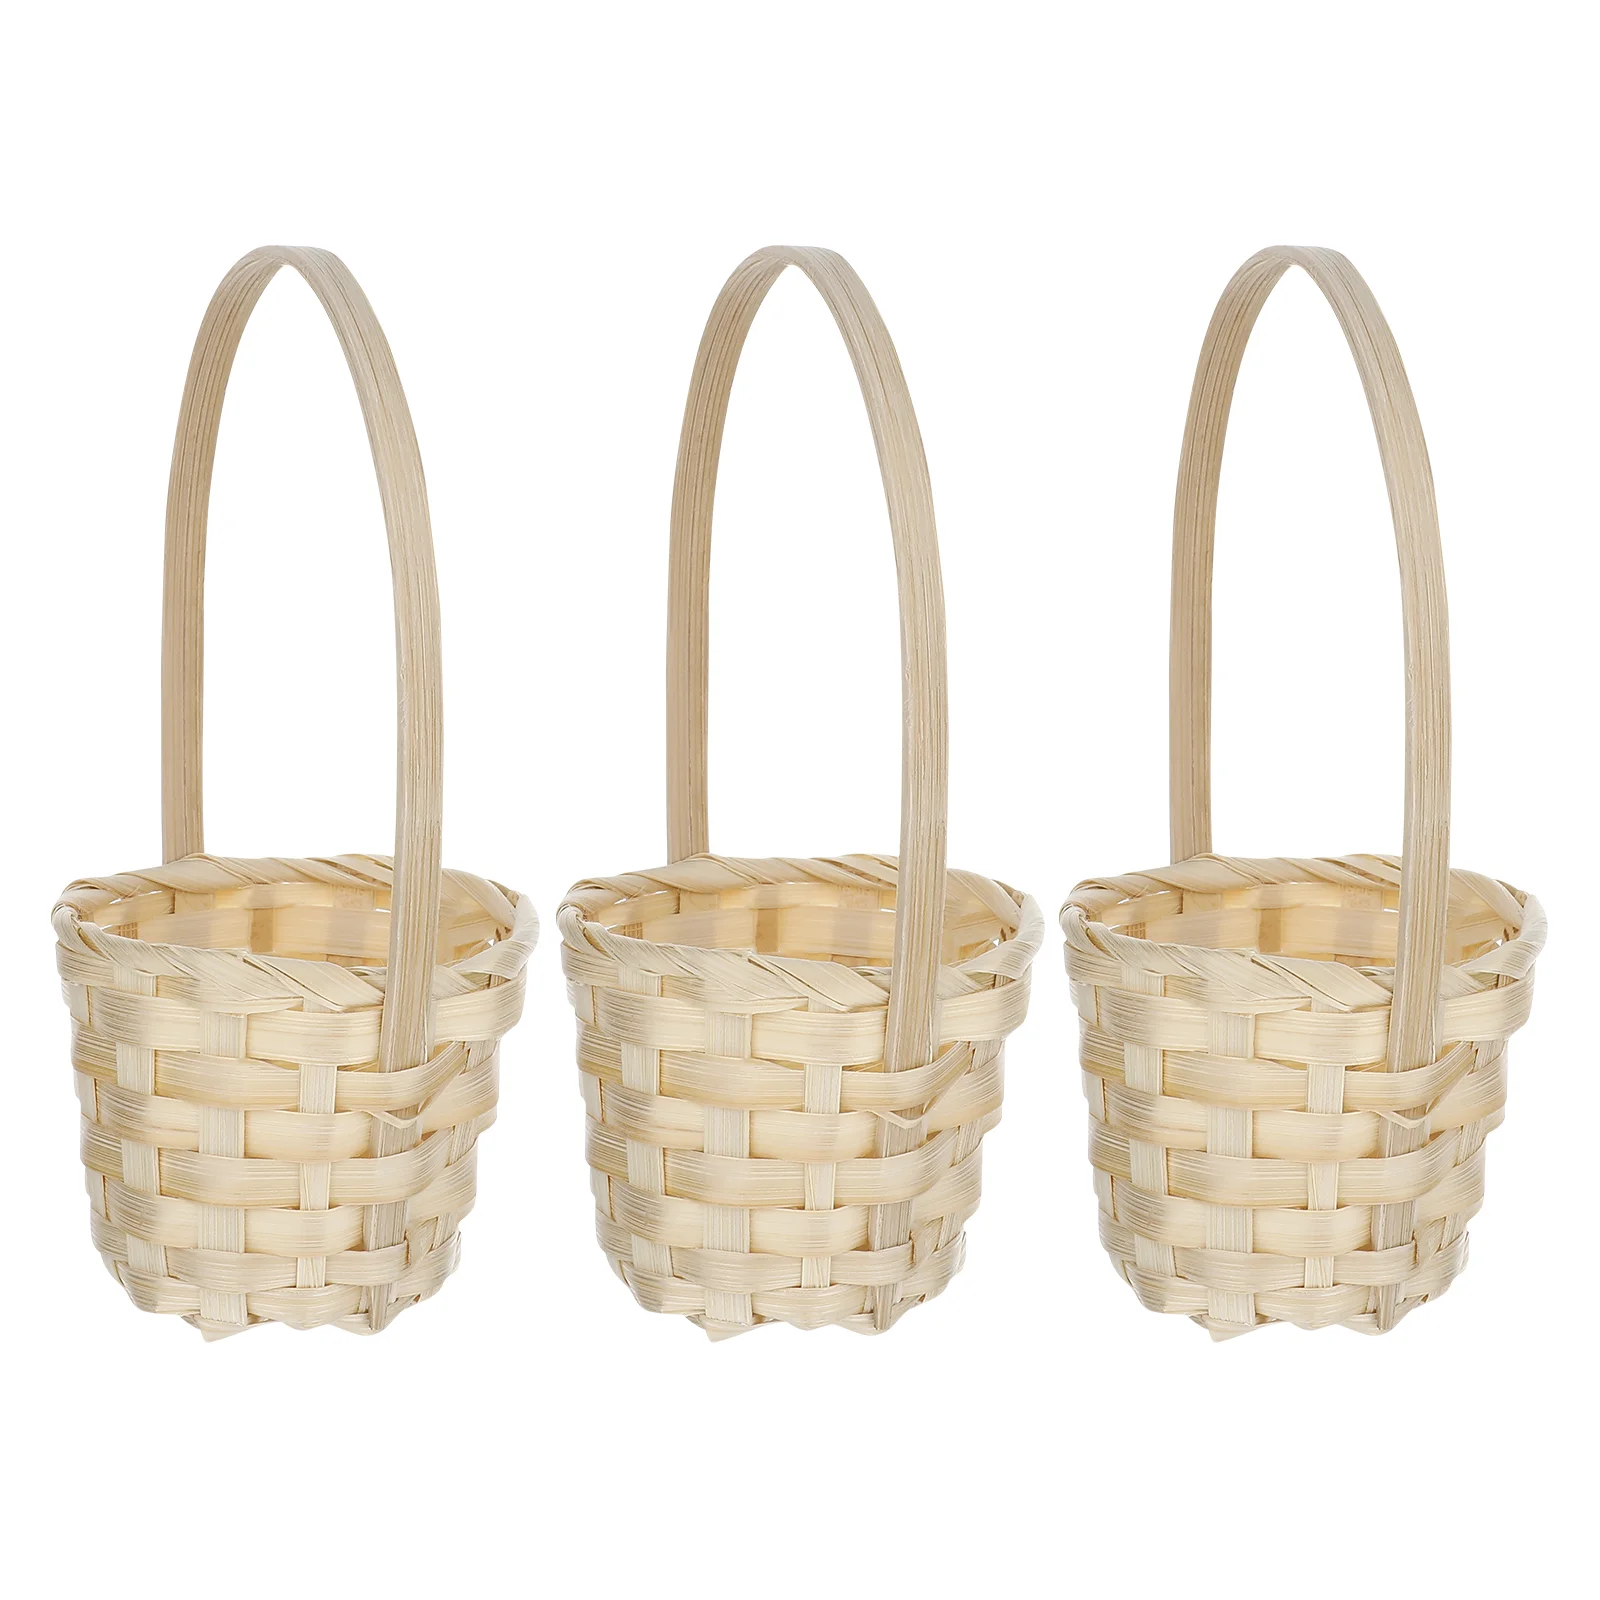 

5pcs Bamboo Woven Baskets Handled Flower Baskets Picnic Baskets Wedding Flower Holder Empty Baskets